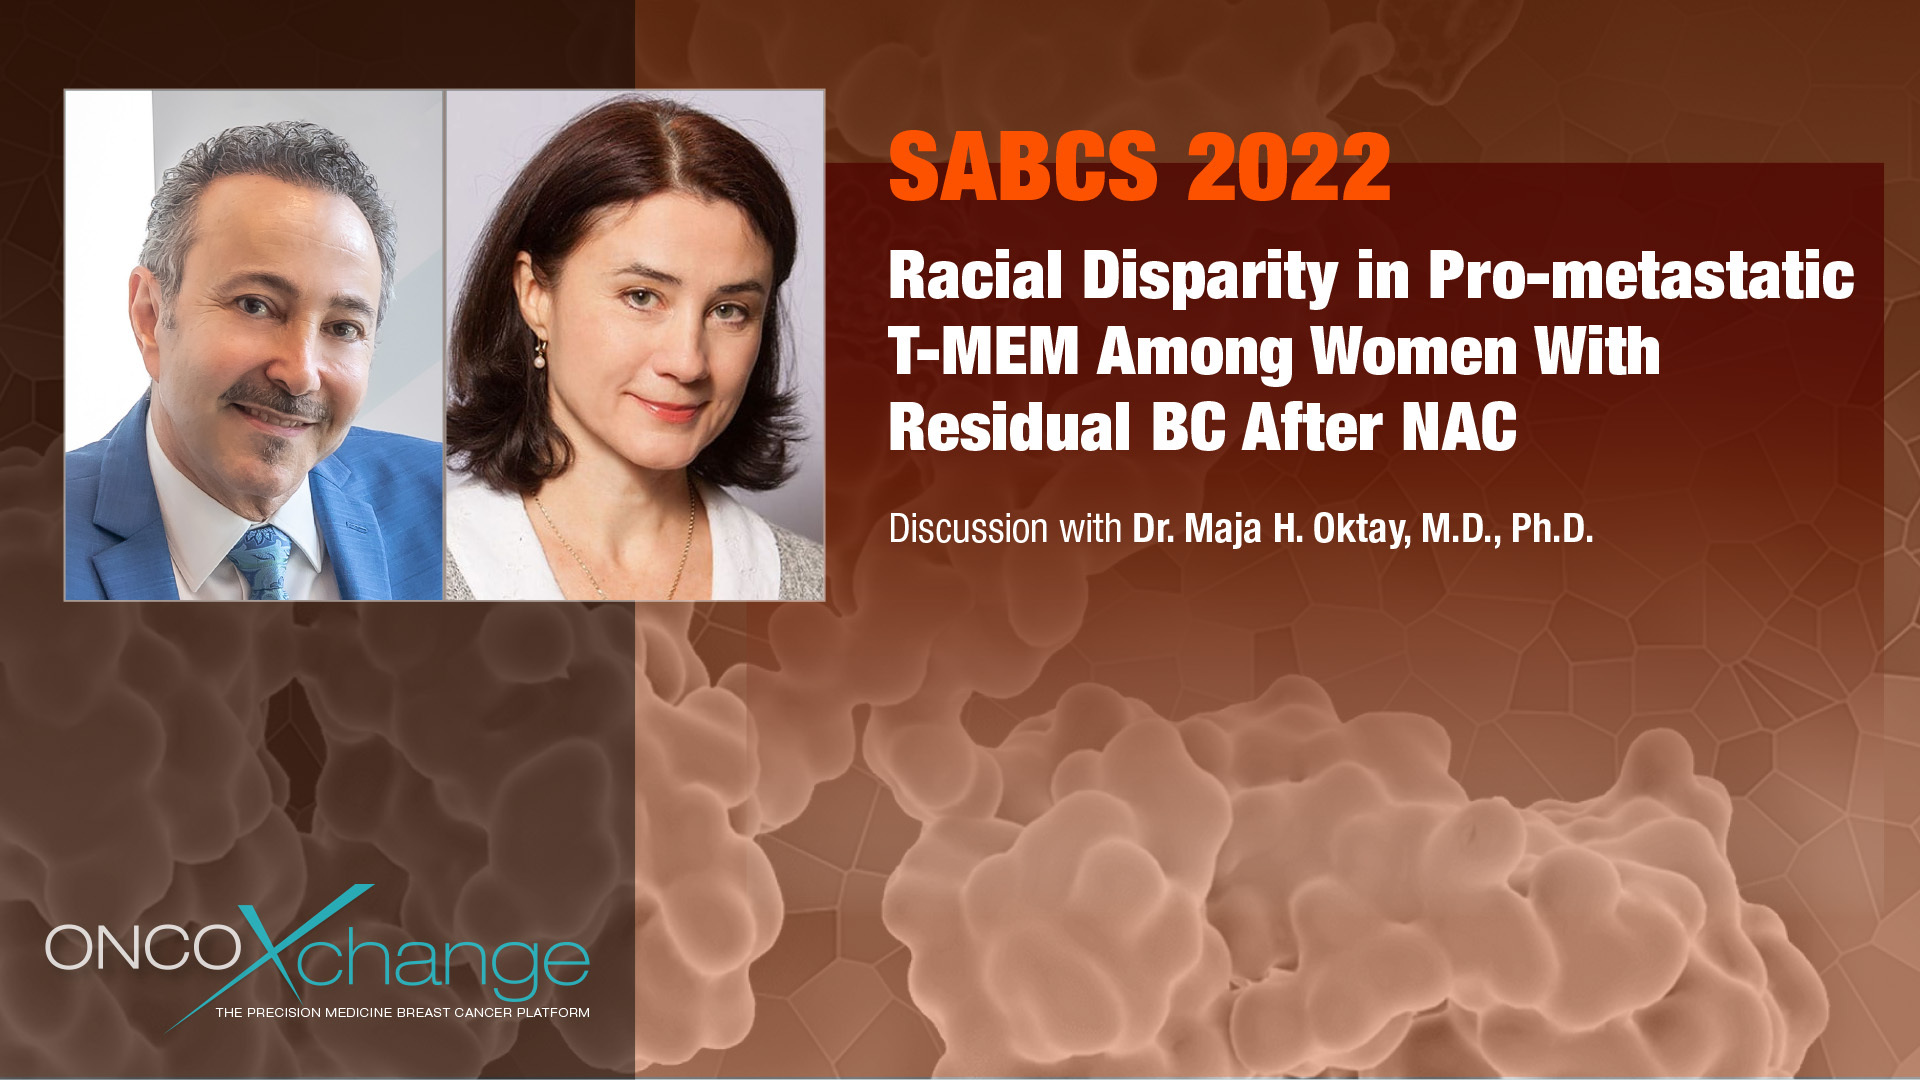 SABCS 2022 - Racial Disparity in Pro-metastatic T-MEM Among Women With Residual BC After NAC